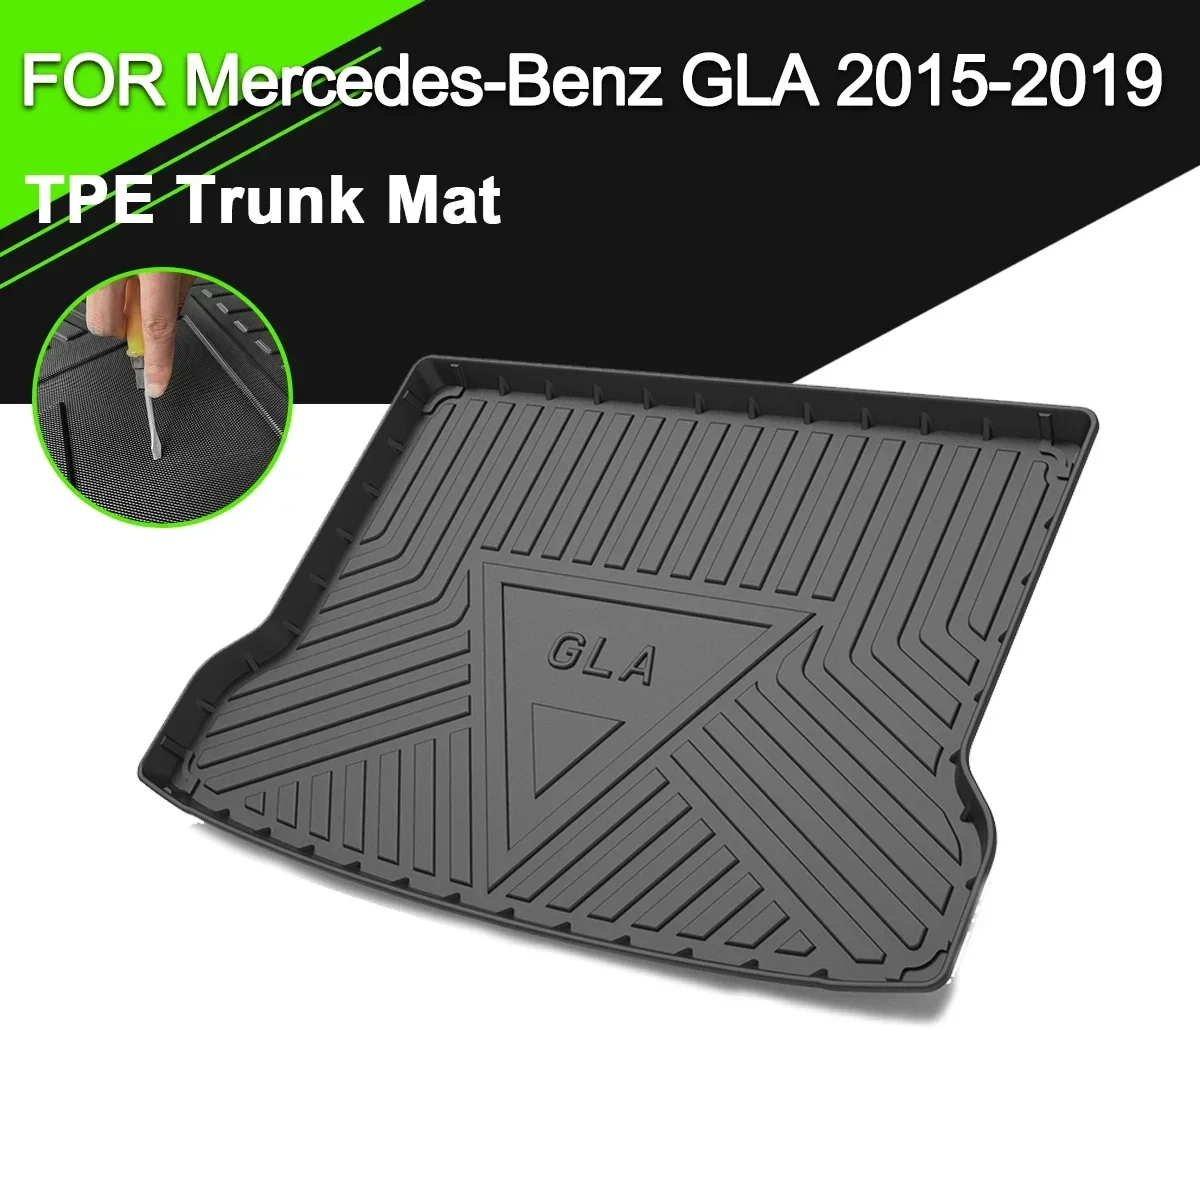 

Car Rear Trunk Cover Mat Rubber TPE Non-Slip Waterproof Cargo Liner Accessories For Mercedes-Benz GLA 2015-2019